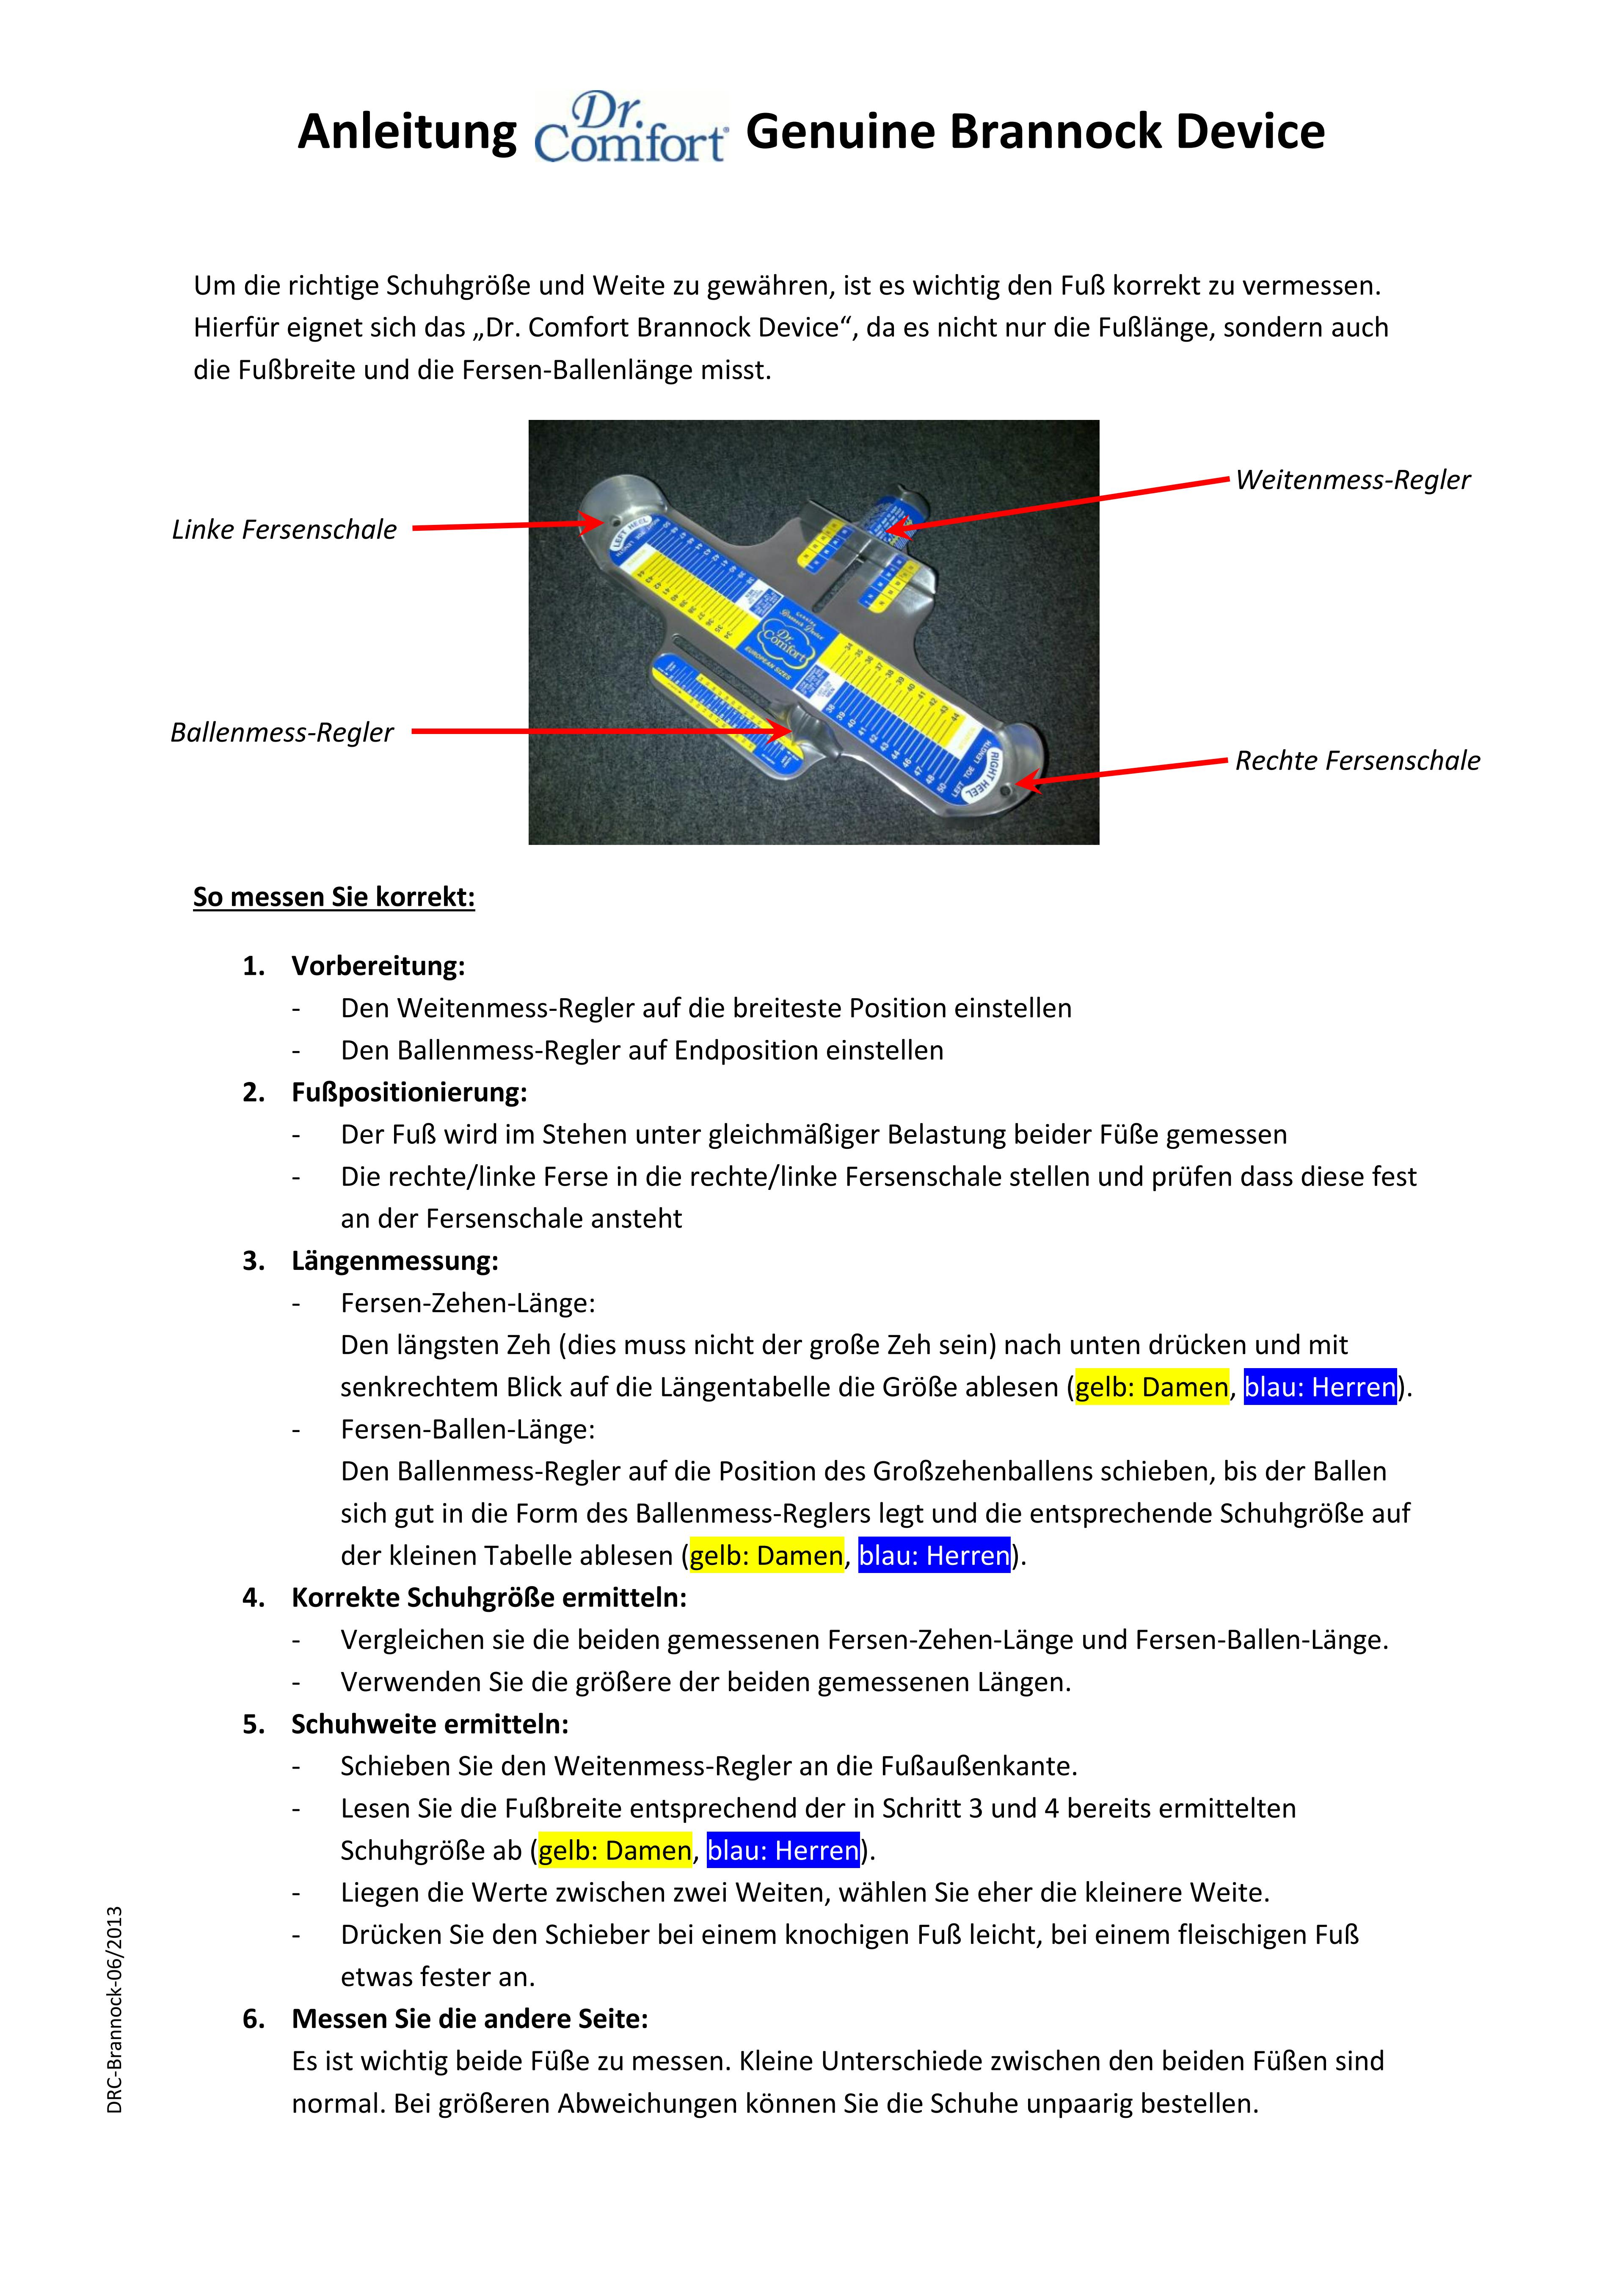 Gebrauchsanleitung_DR.COMFORT_Genuine-Brannock-Device_DRC-Brannock-06-2013.pdf